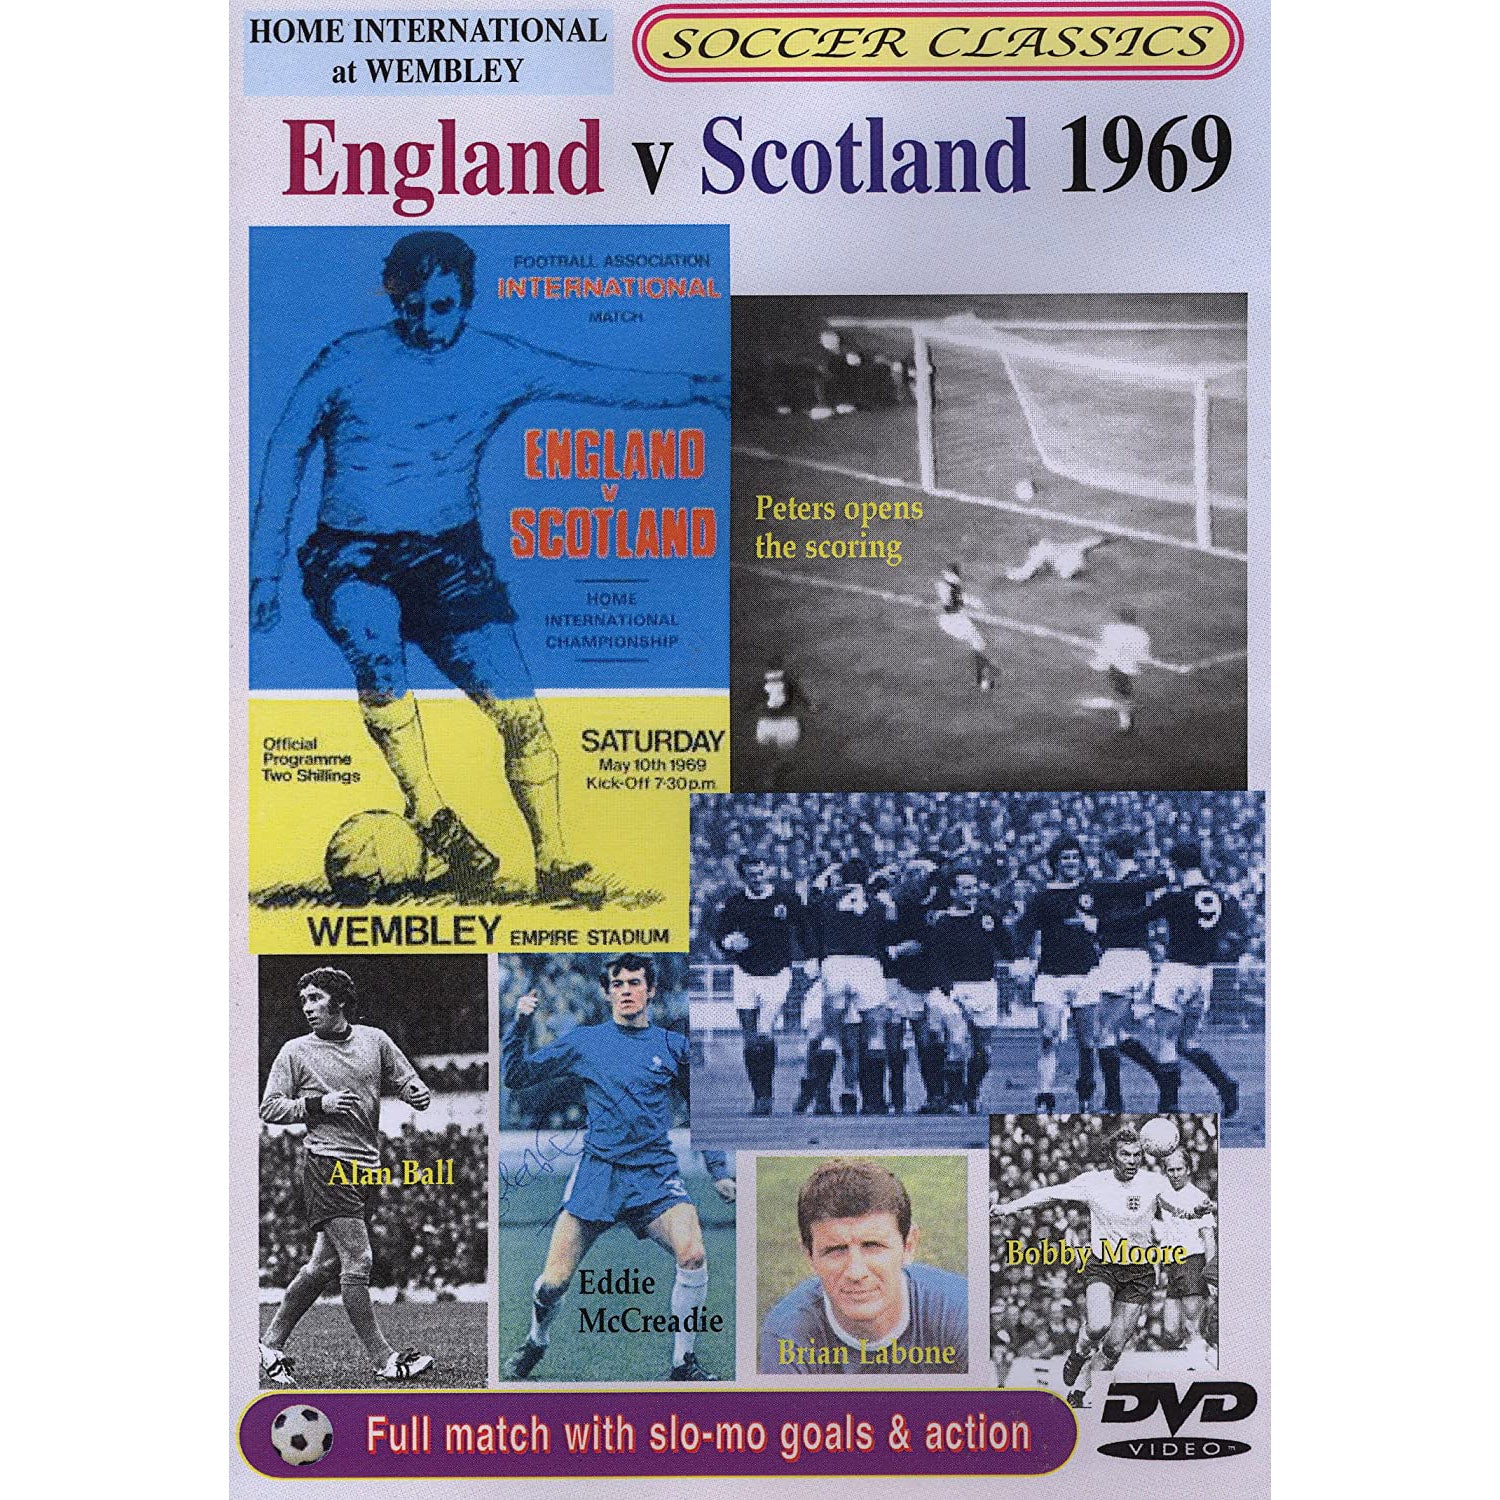 England v Scotland 1969 – Home International at Wembley